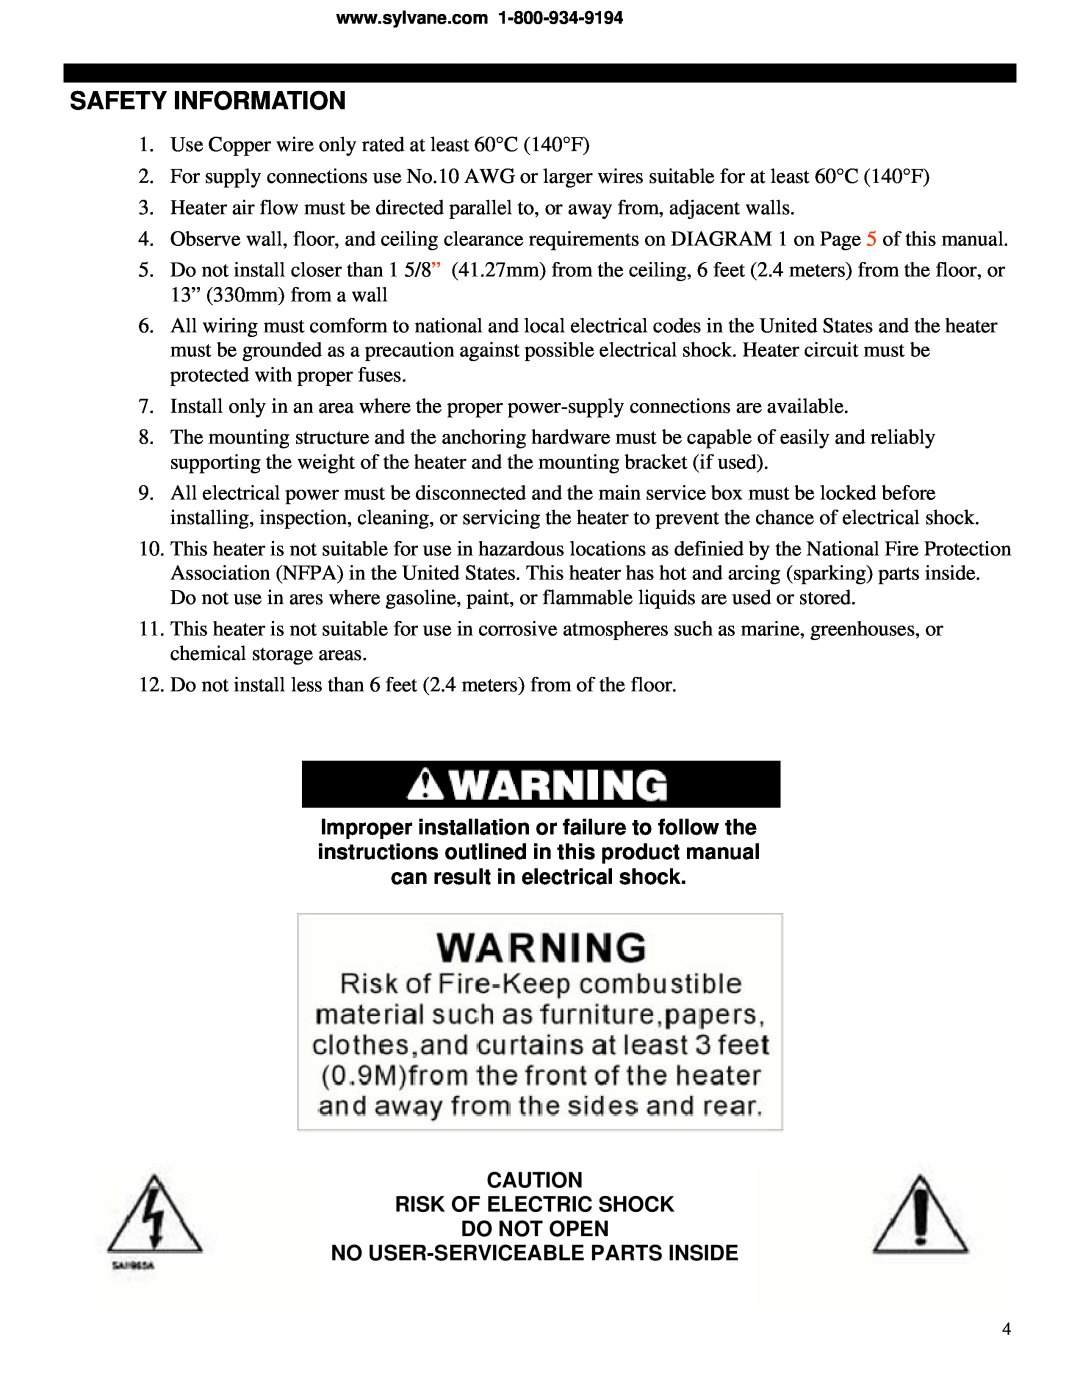 Soleus Air HI1-50-03 manual Safety Information, Risk Of Electric Shock Do Not Open, No User-Serviceableparts Inside 